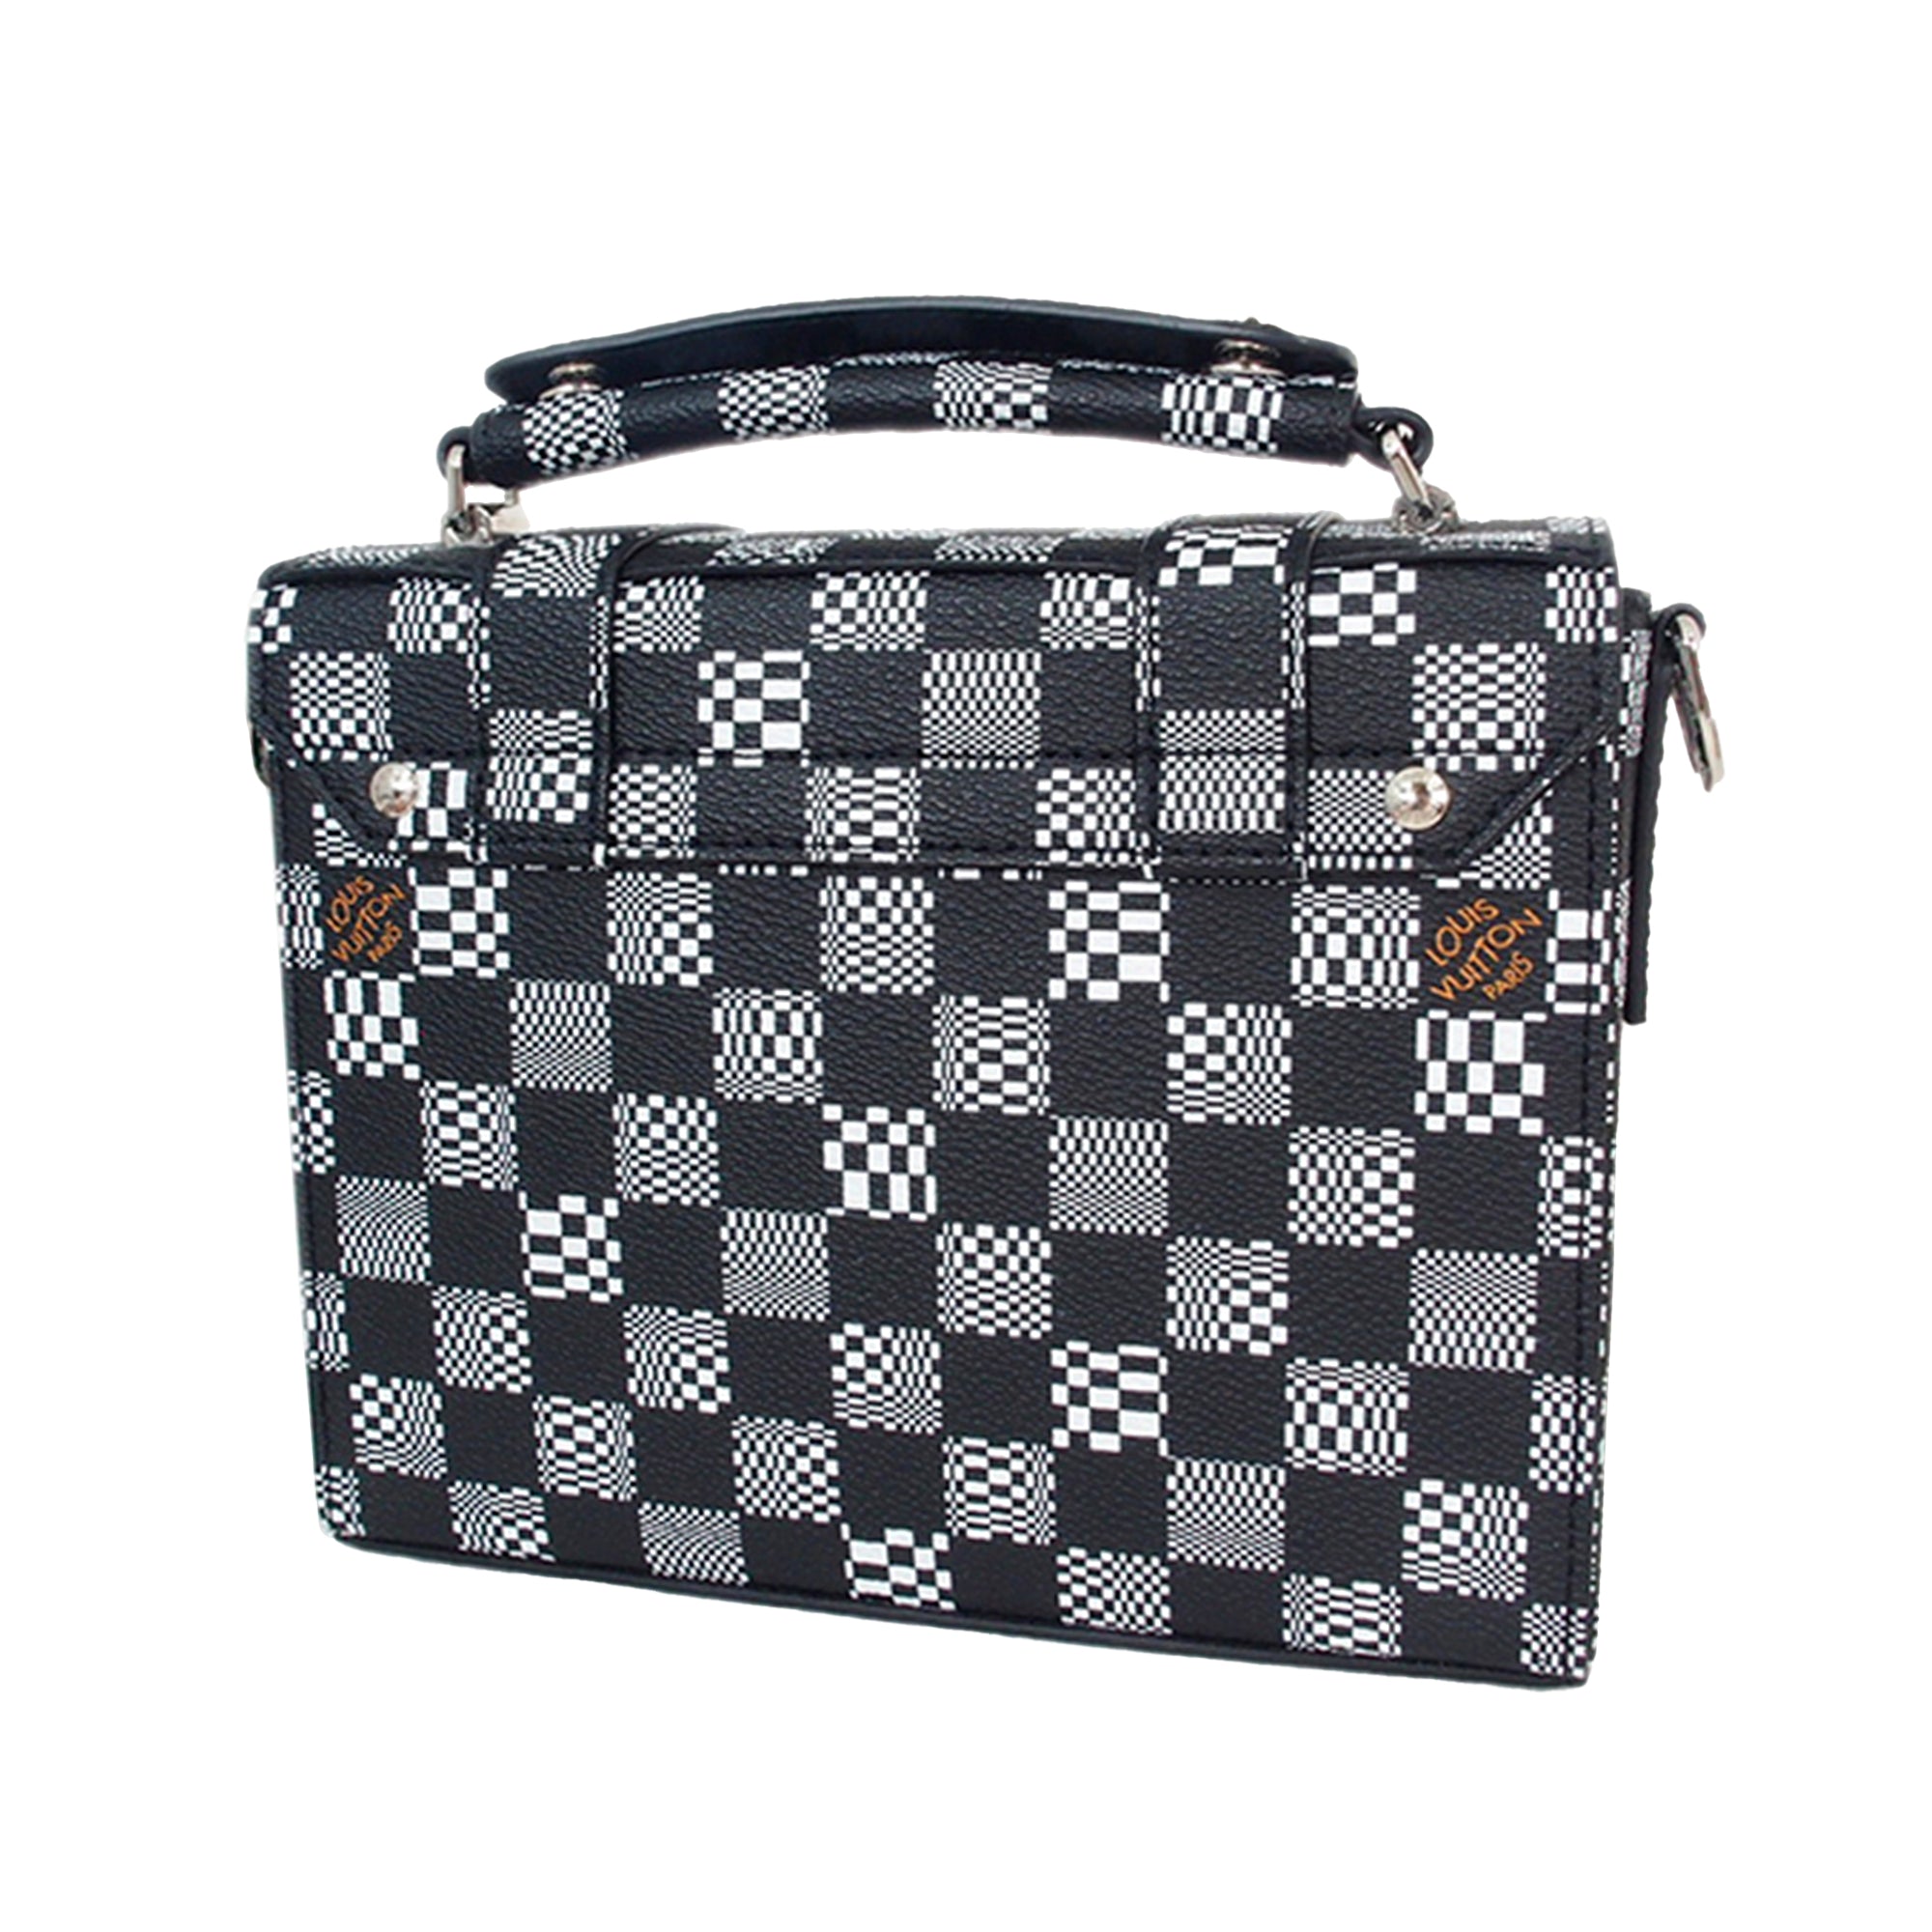 Louis Satchel bag - Black - Messenger, Laptop bag, Crossbody bag